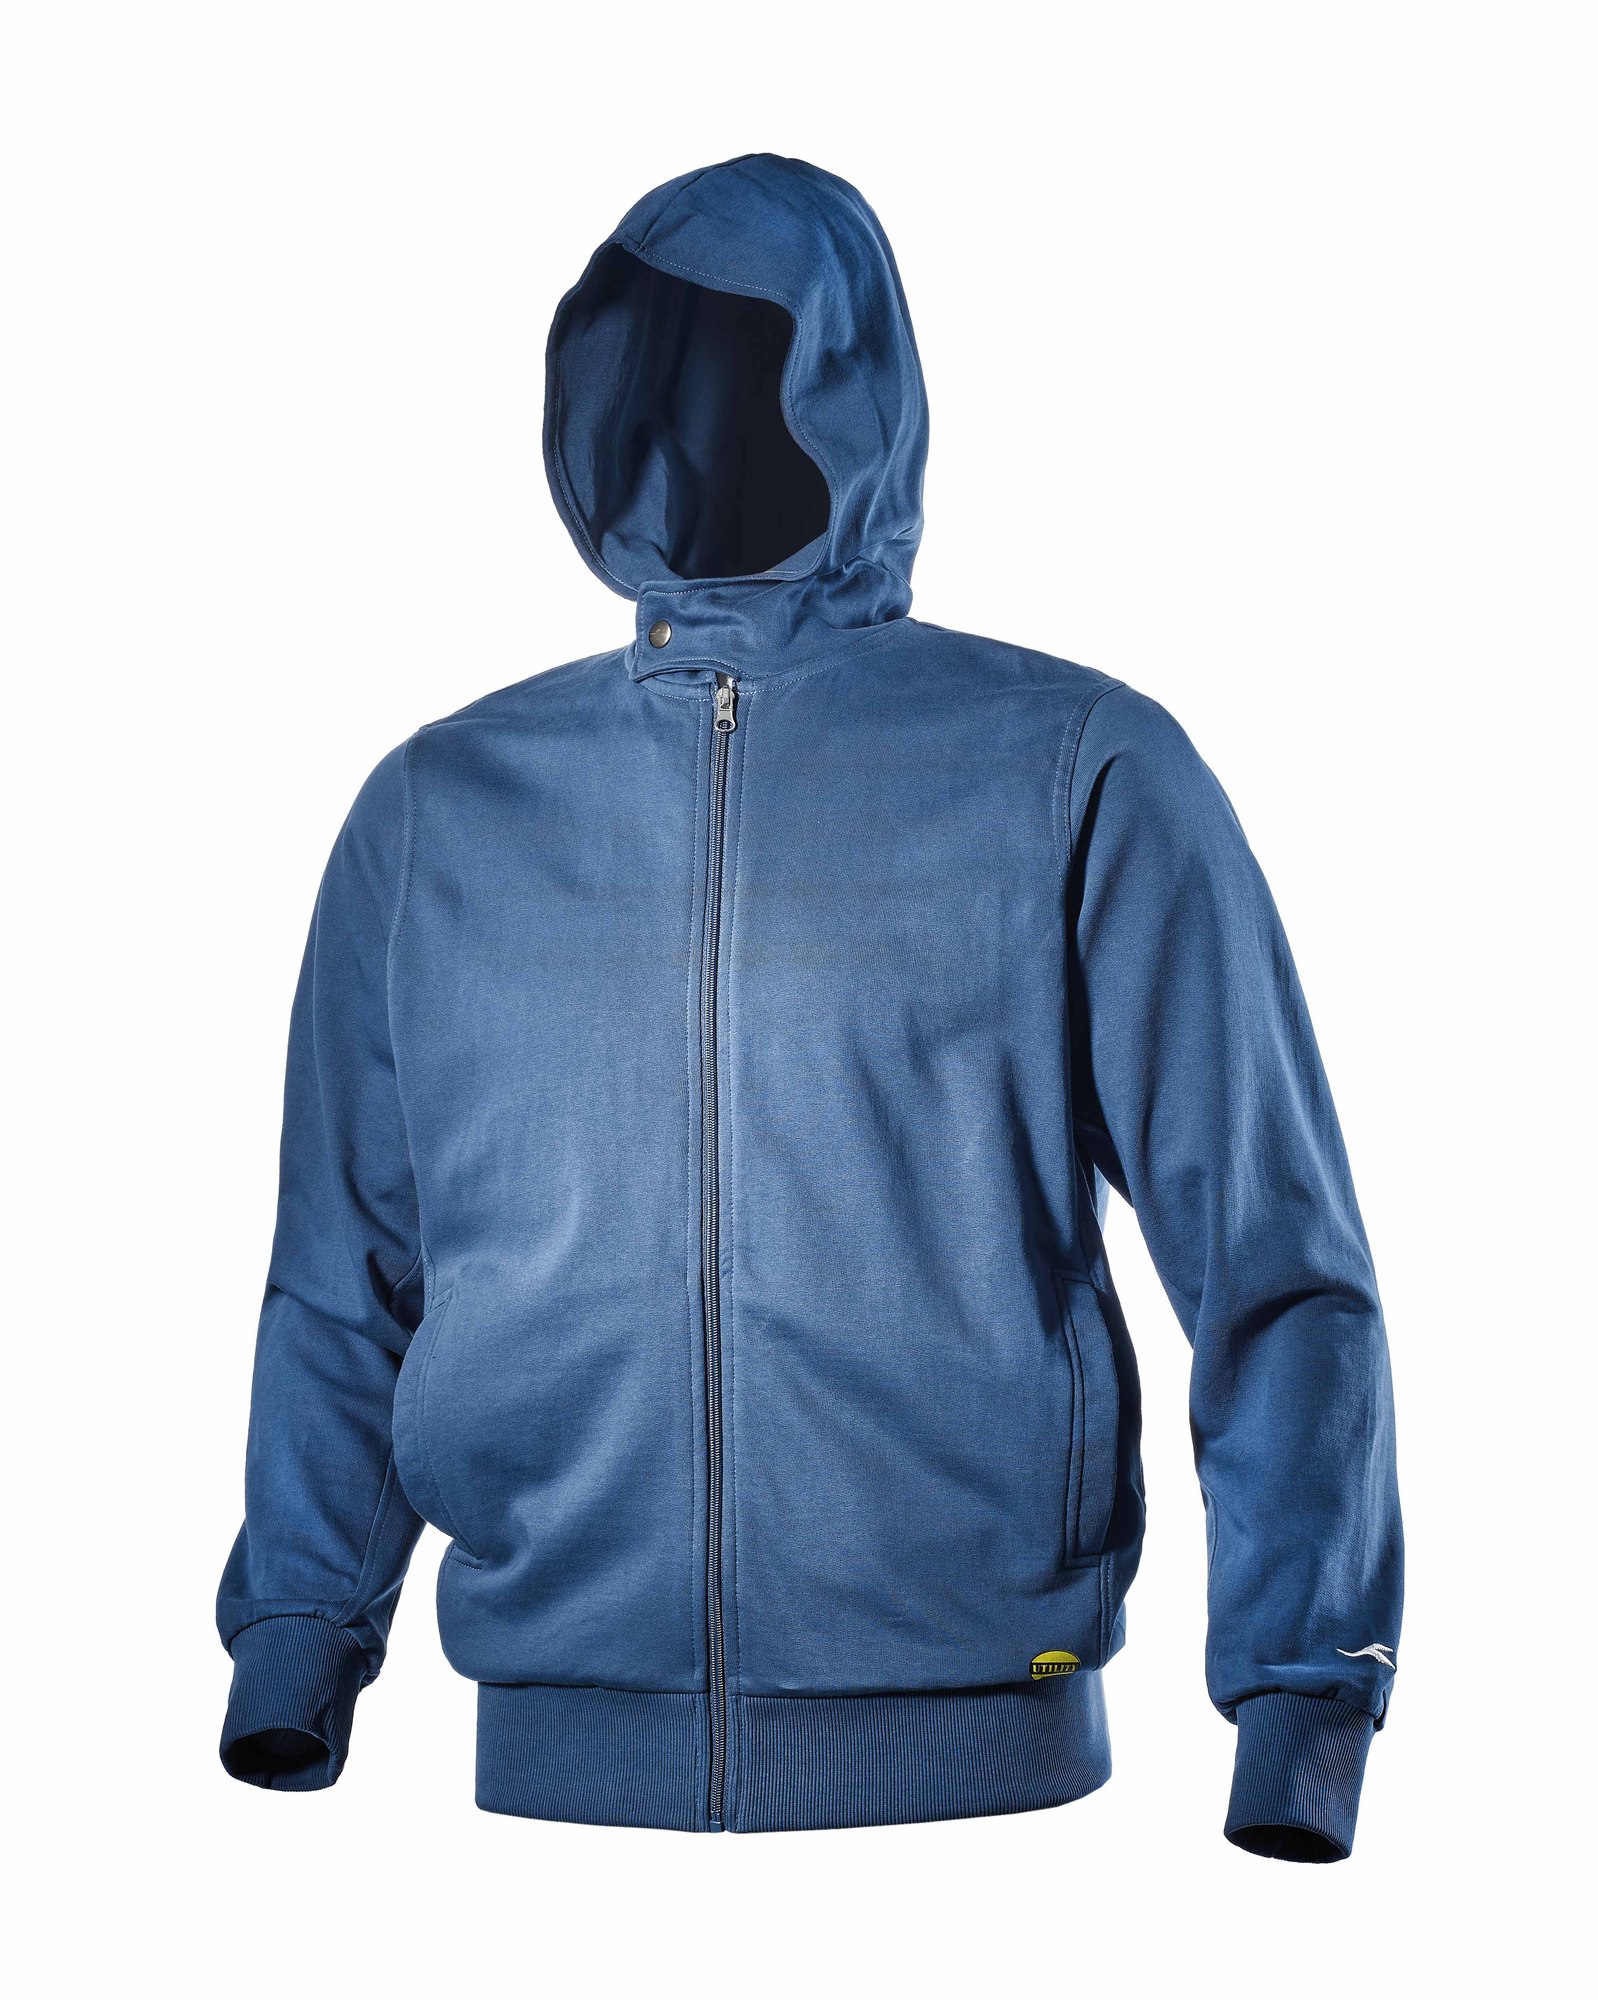 Sweatshirt THUNDER bleu roi T3XL - DIADORA SPA - 702.157767.XXXL60030